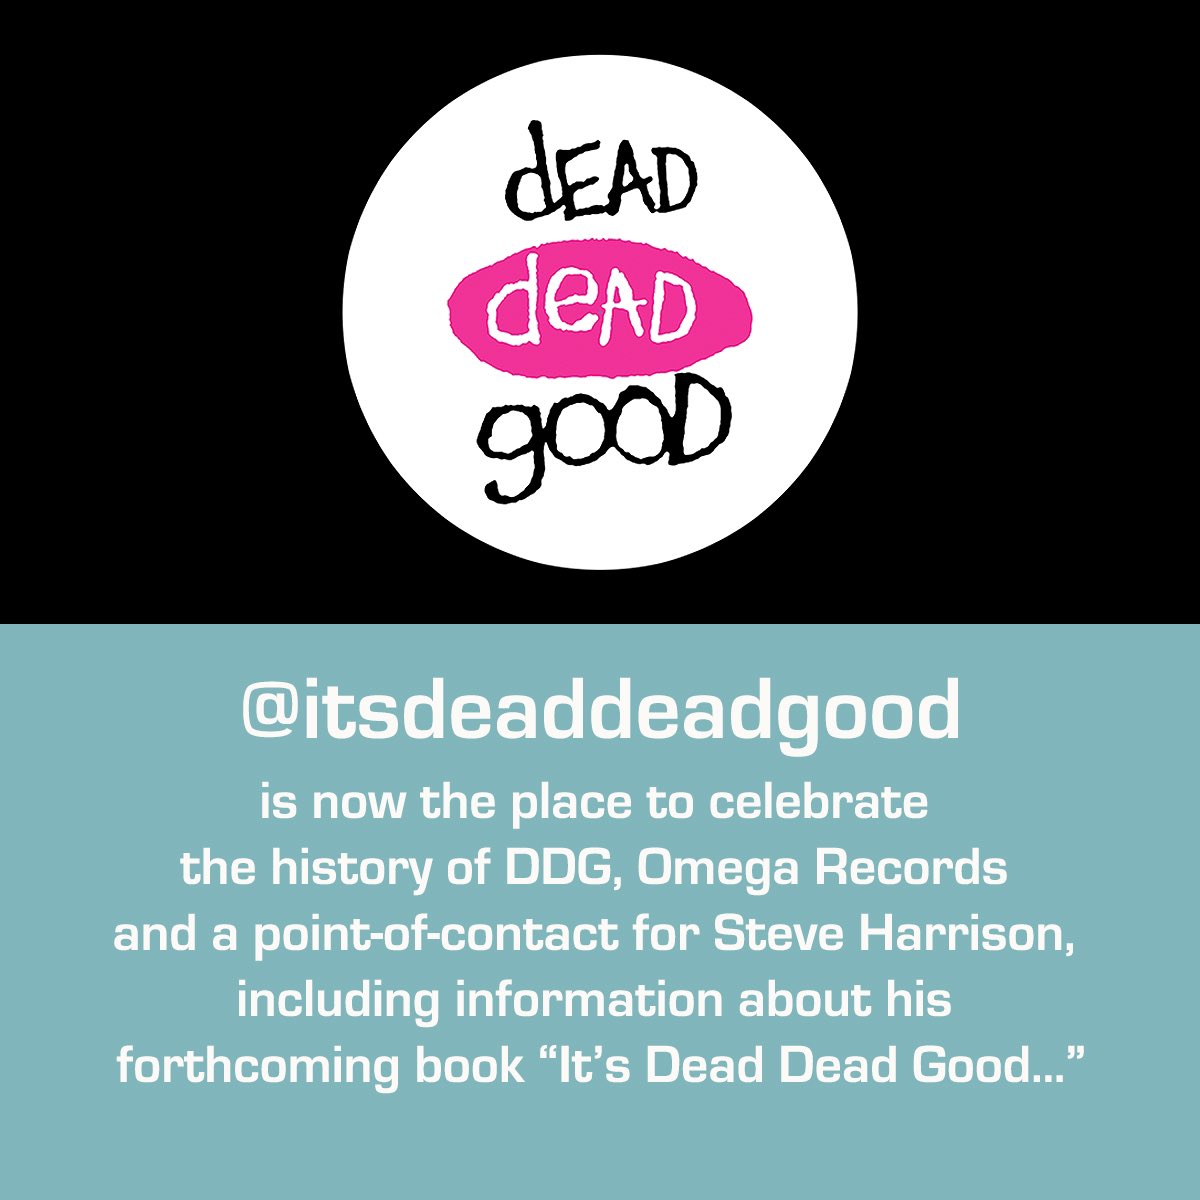 Please follow Steve Harrison at @itsdeaddeadgood for updates about the forthcoming book 📚 & history about #DDG & #OmegaRecords 

#steveharrison | #itsdeaddeadgood | #recordshop | #recordlabel | #manager | #SteveH | #deaddeadgoodrecords | #dancelabel | #transworldrecords